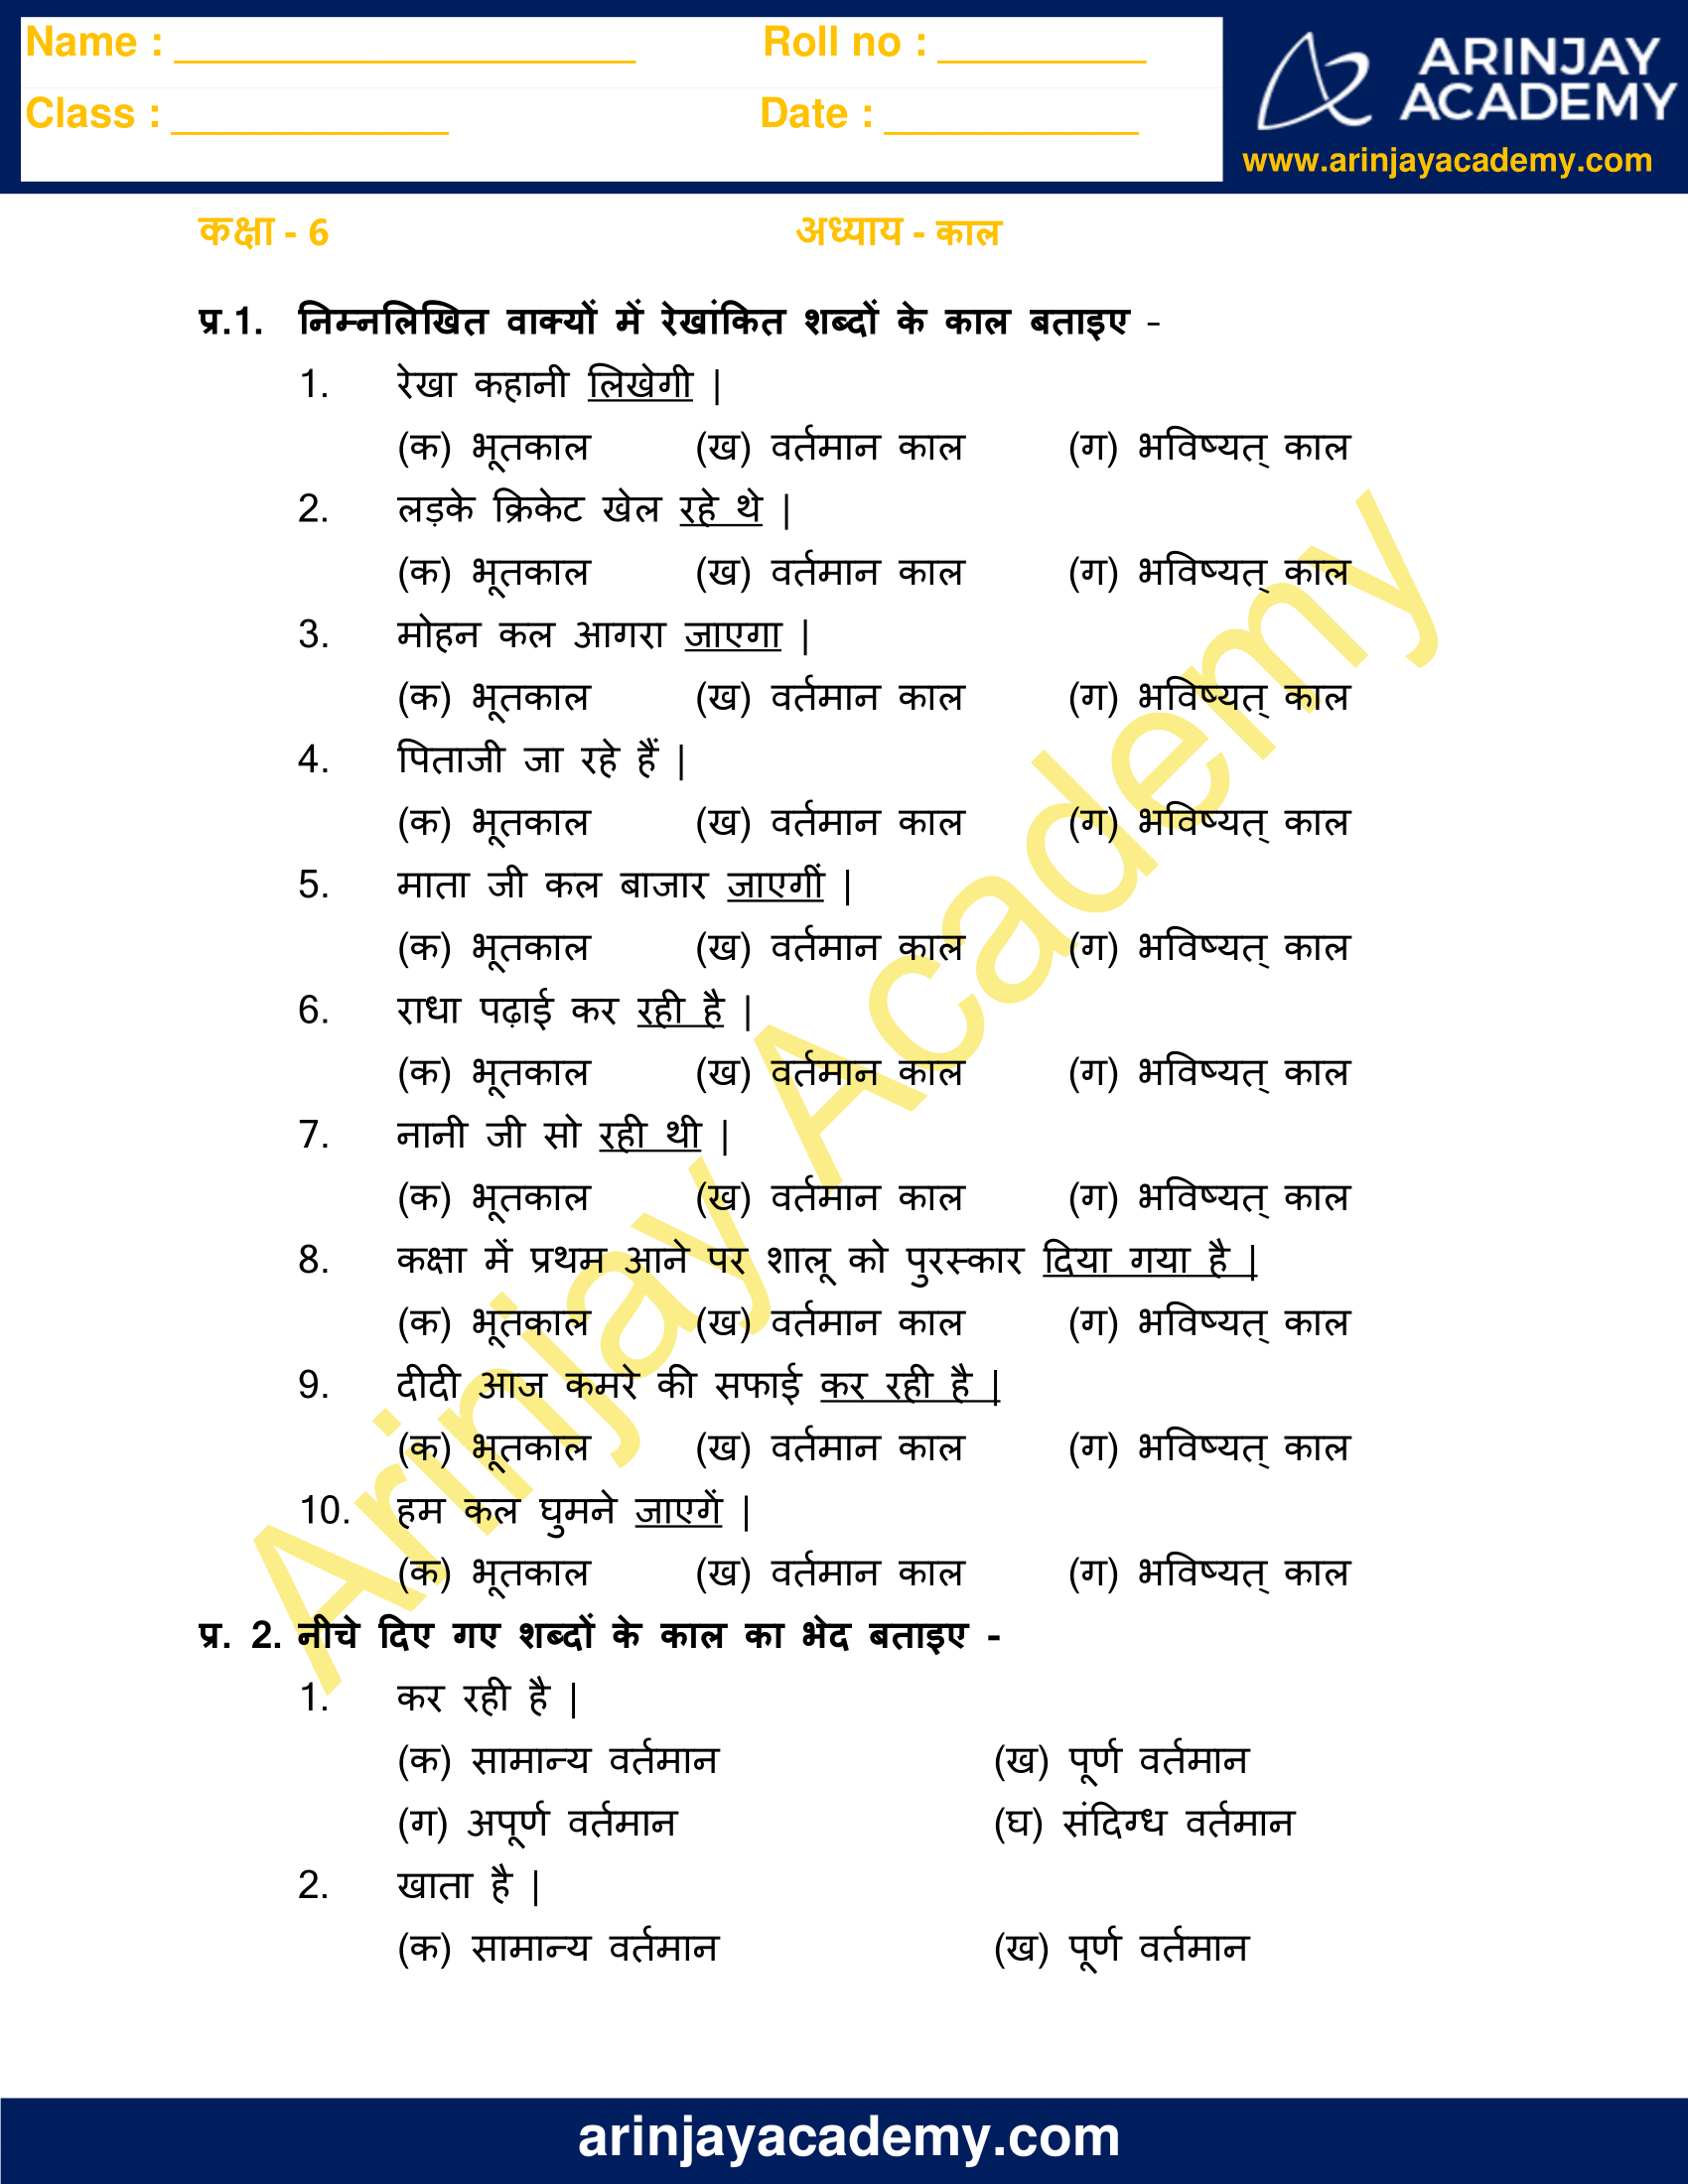 hindi grammar work sheet collection for classes 56 7 8 matra work